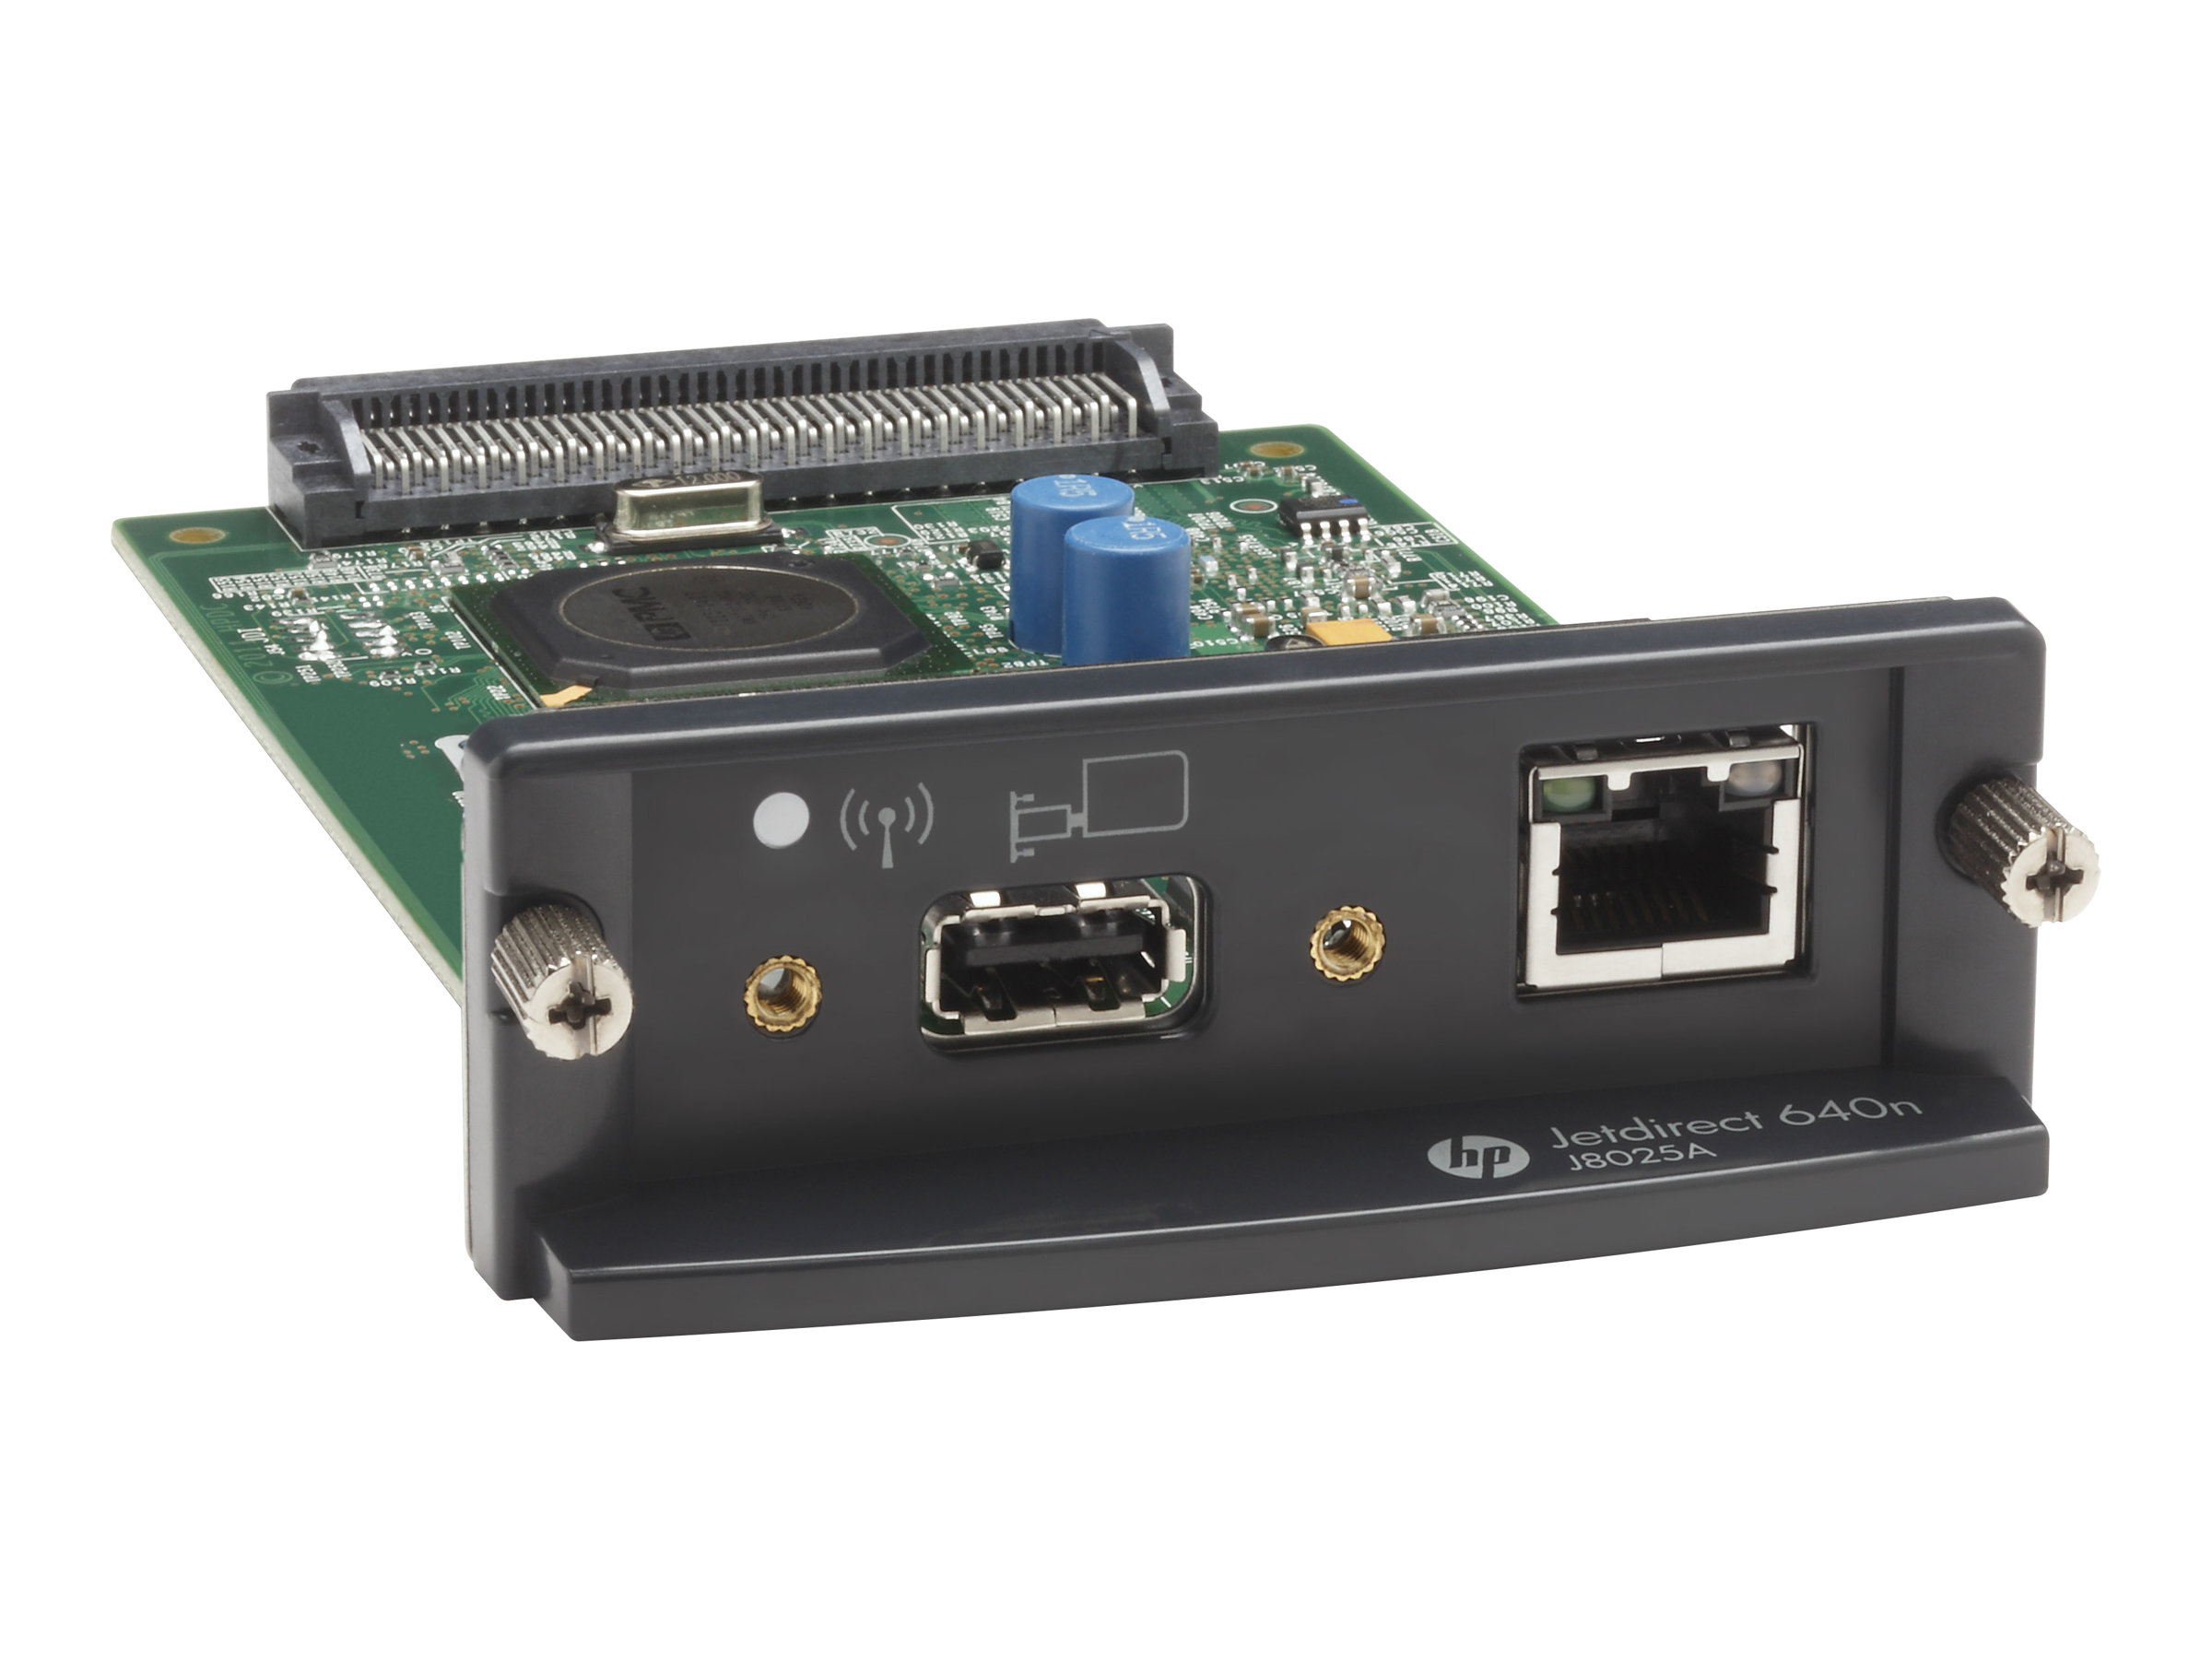 HP JetDirect 640n - Druckserver - EIO - Gigabit Ethernet - für DesignJet HD Pro MFP, SD Pro MFP, T1120, T2300, Z2600, Z5600, Z6610, Z6800, Z6810